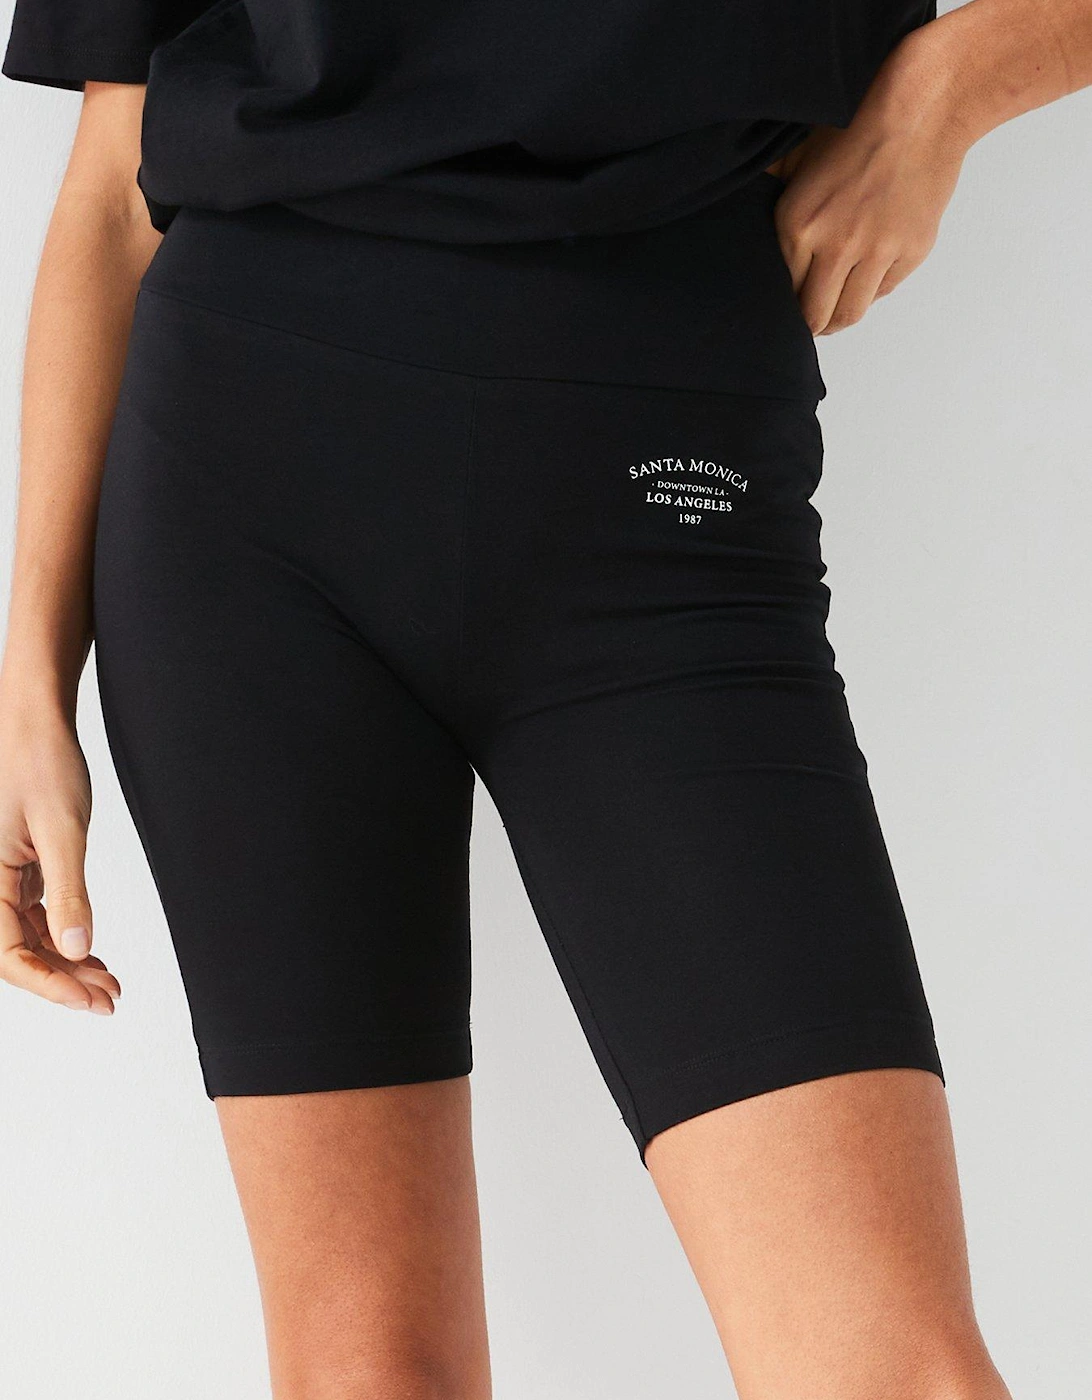 Ath Leisure Cycling Shorts - Black